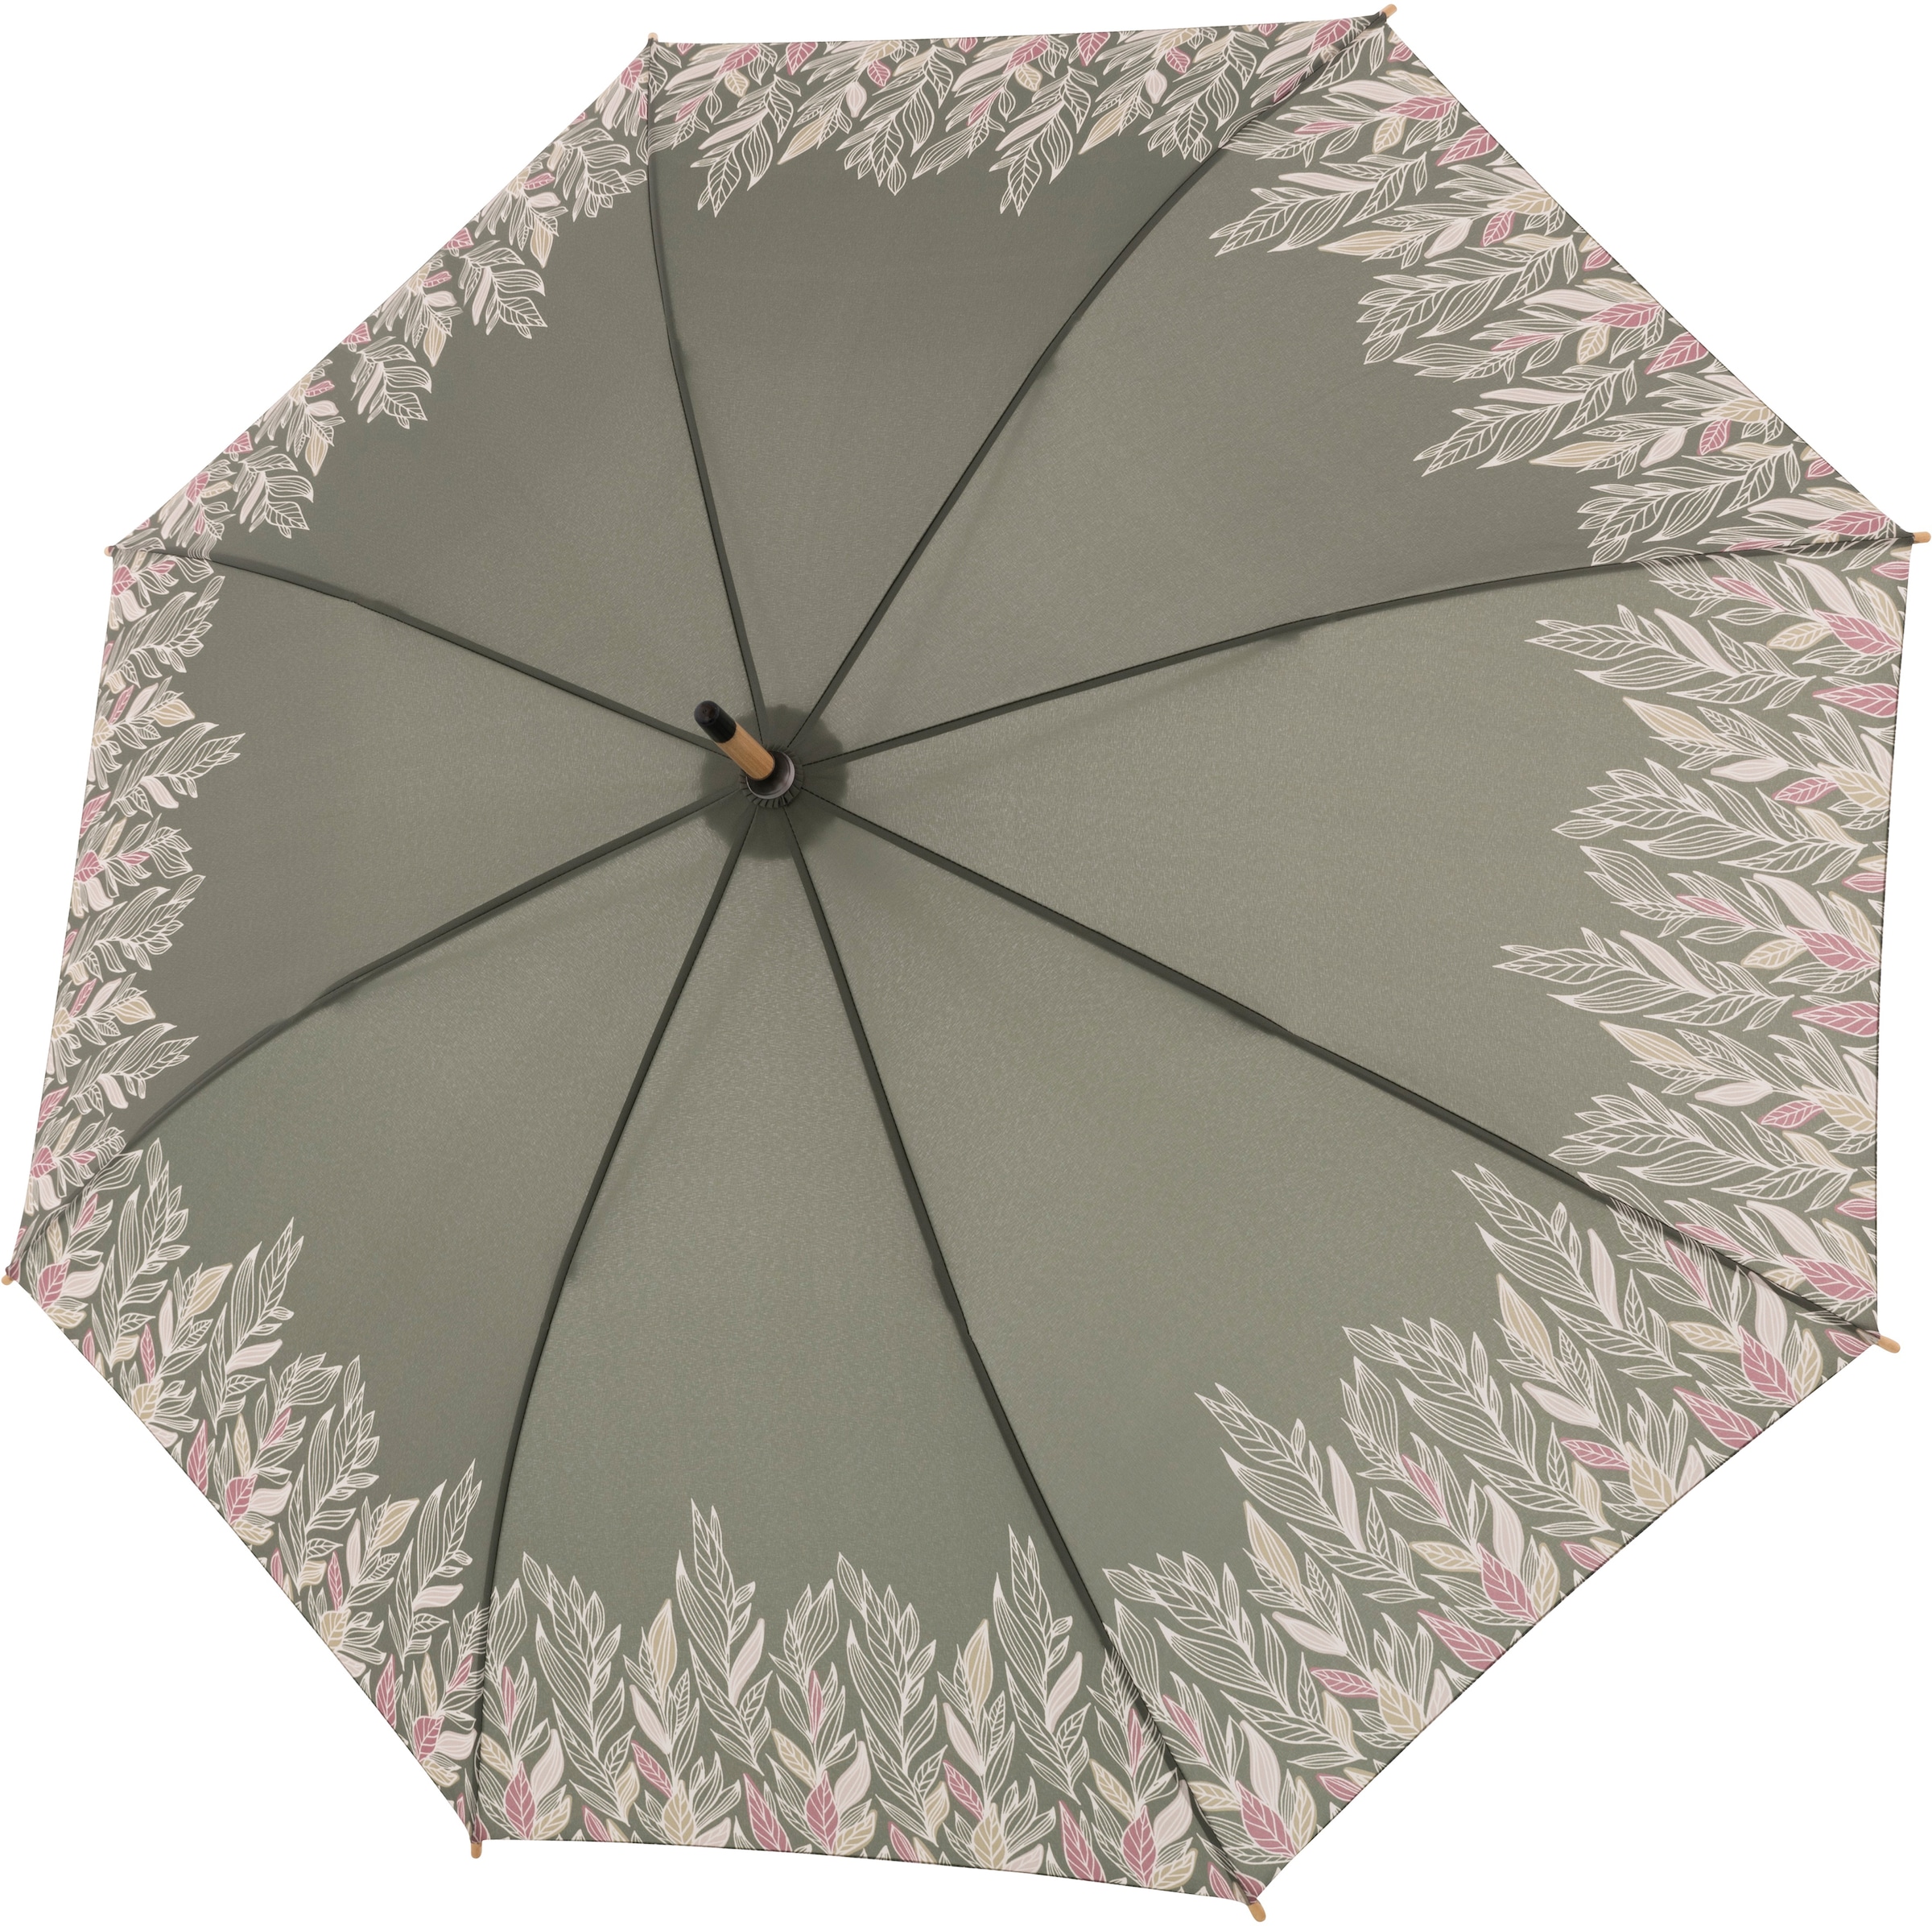 Holz Long, intention kaufen olive«, »nature Material Schirmgriff recyceltem doppler® Stockregenschirm aus mit aus